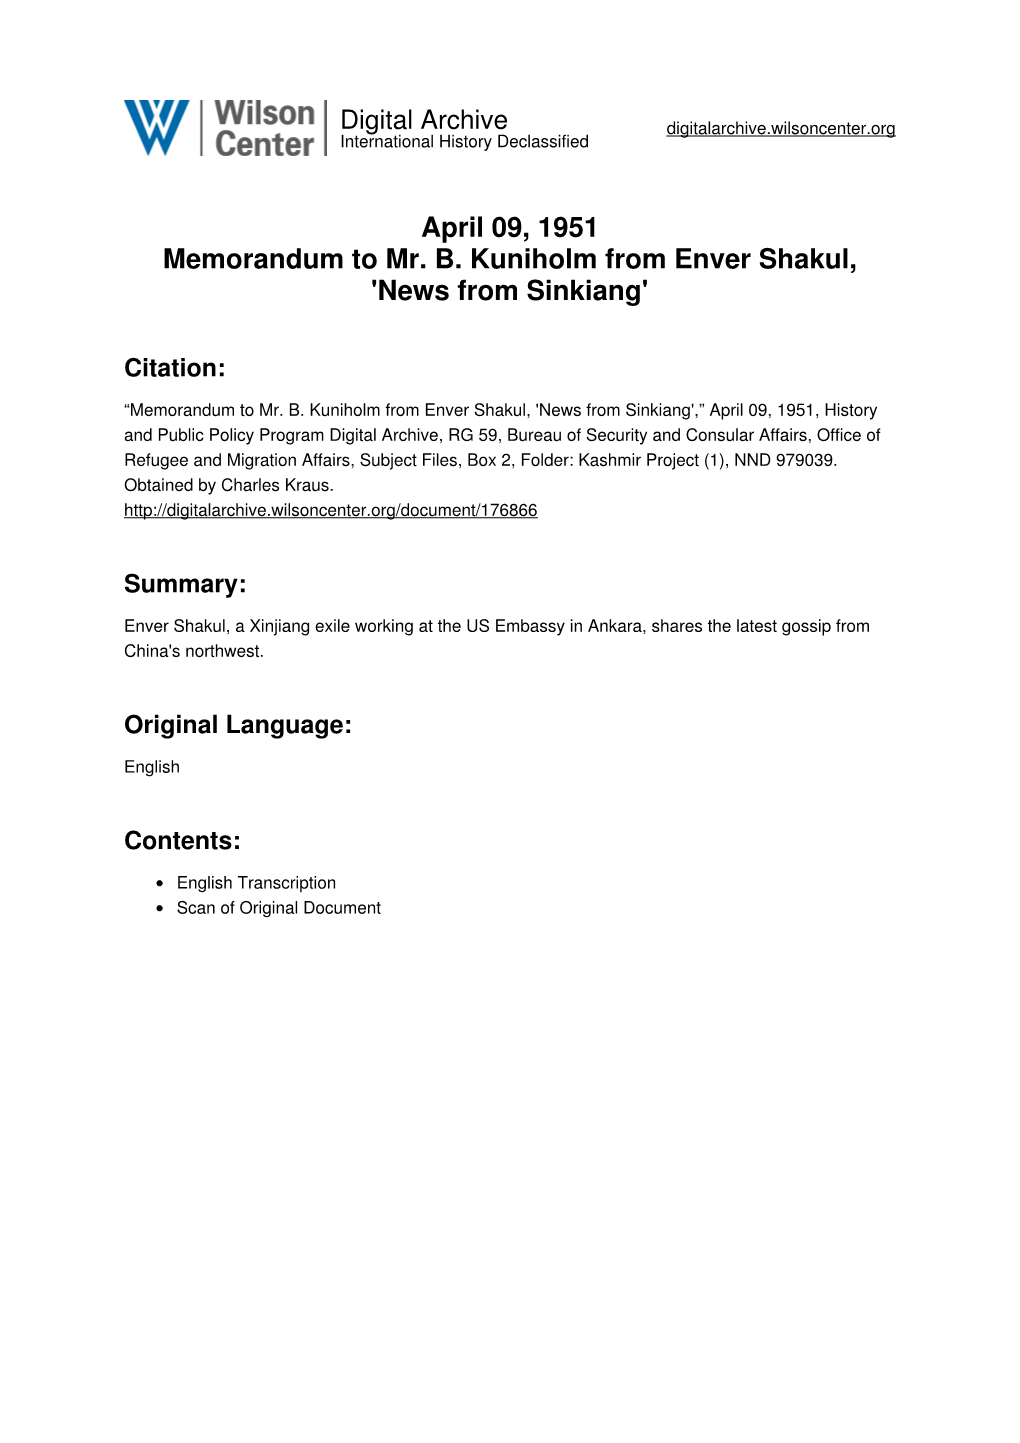 April 09, 1951 Memorandum to Mr. B. Kuniholm from Enver Shakul, 'News from Sinkiang'